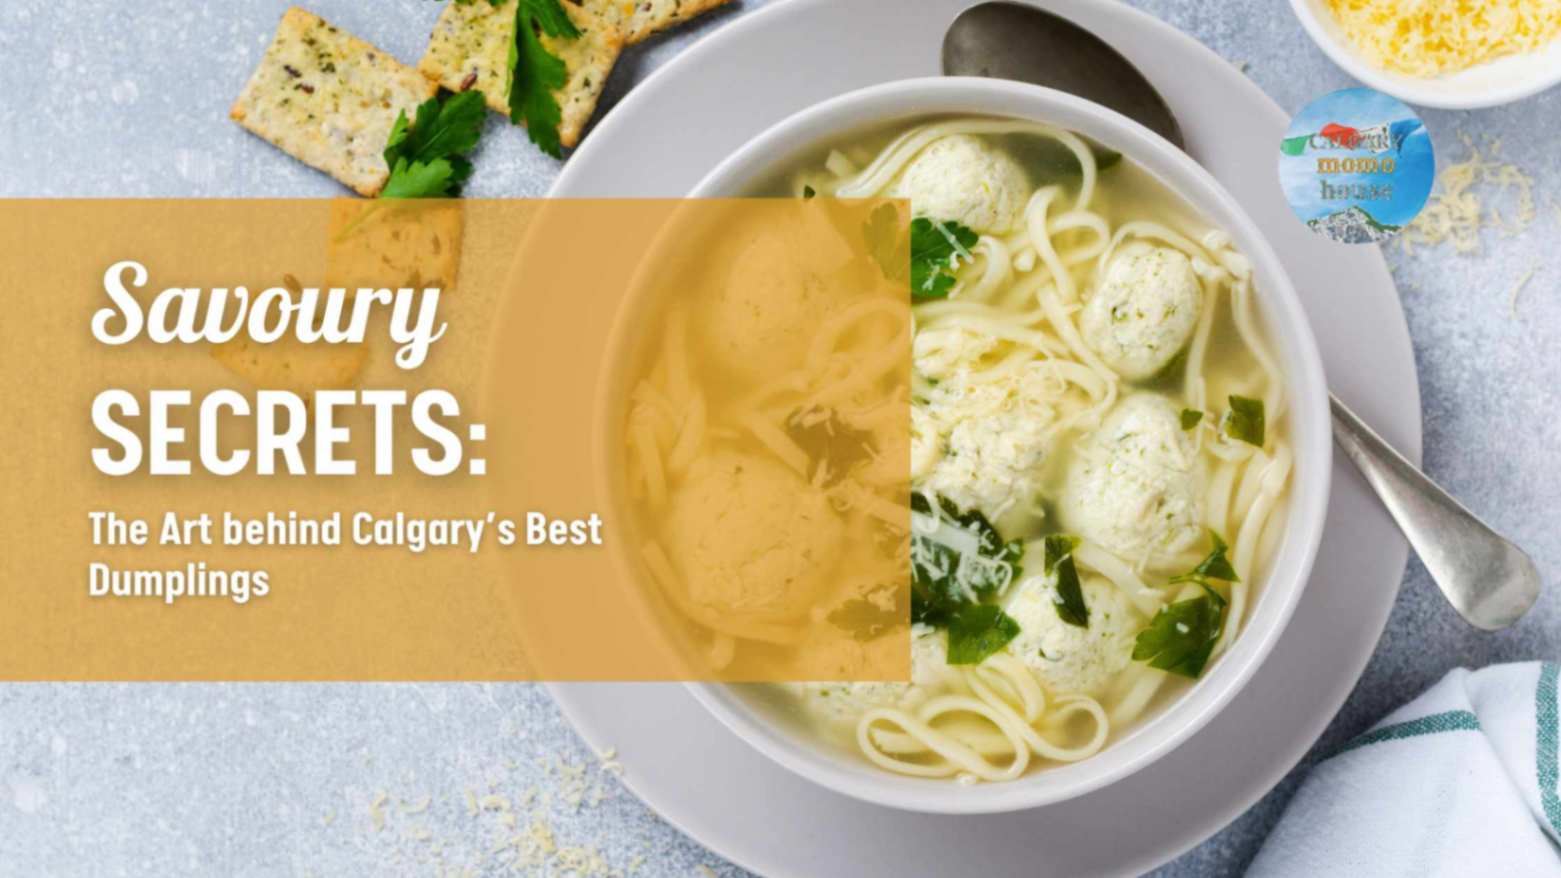 Savoury Secrets: The Art behind Calgary’s Best Dumplings